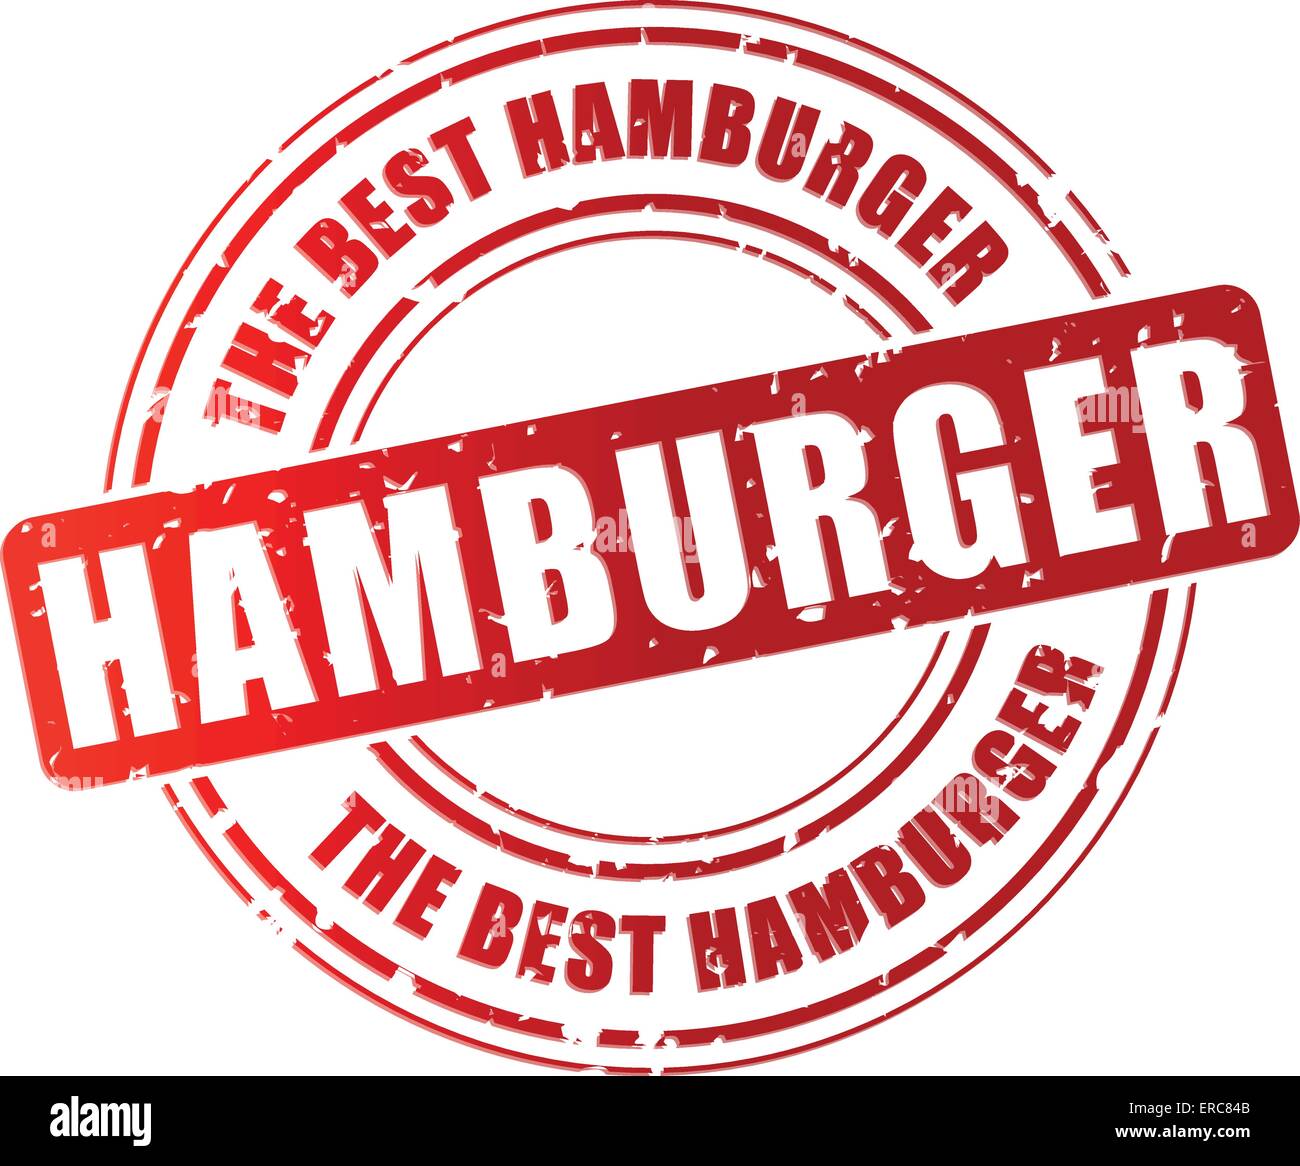 Vektor-Illustration der beste Hamburger roten Stempel Konzept Stock Vektor